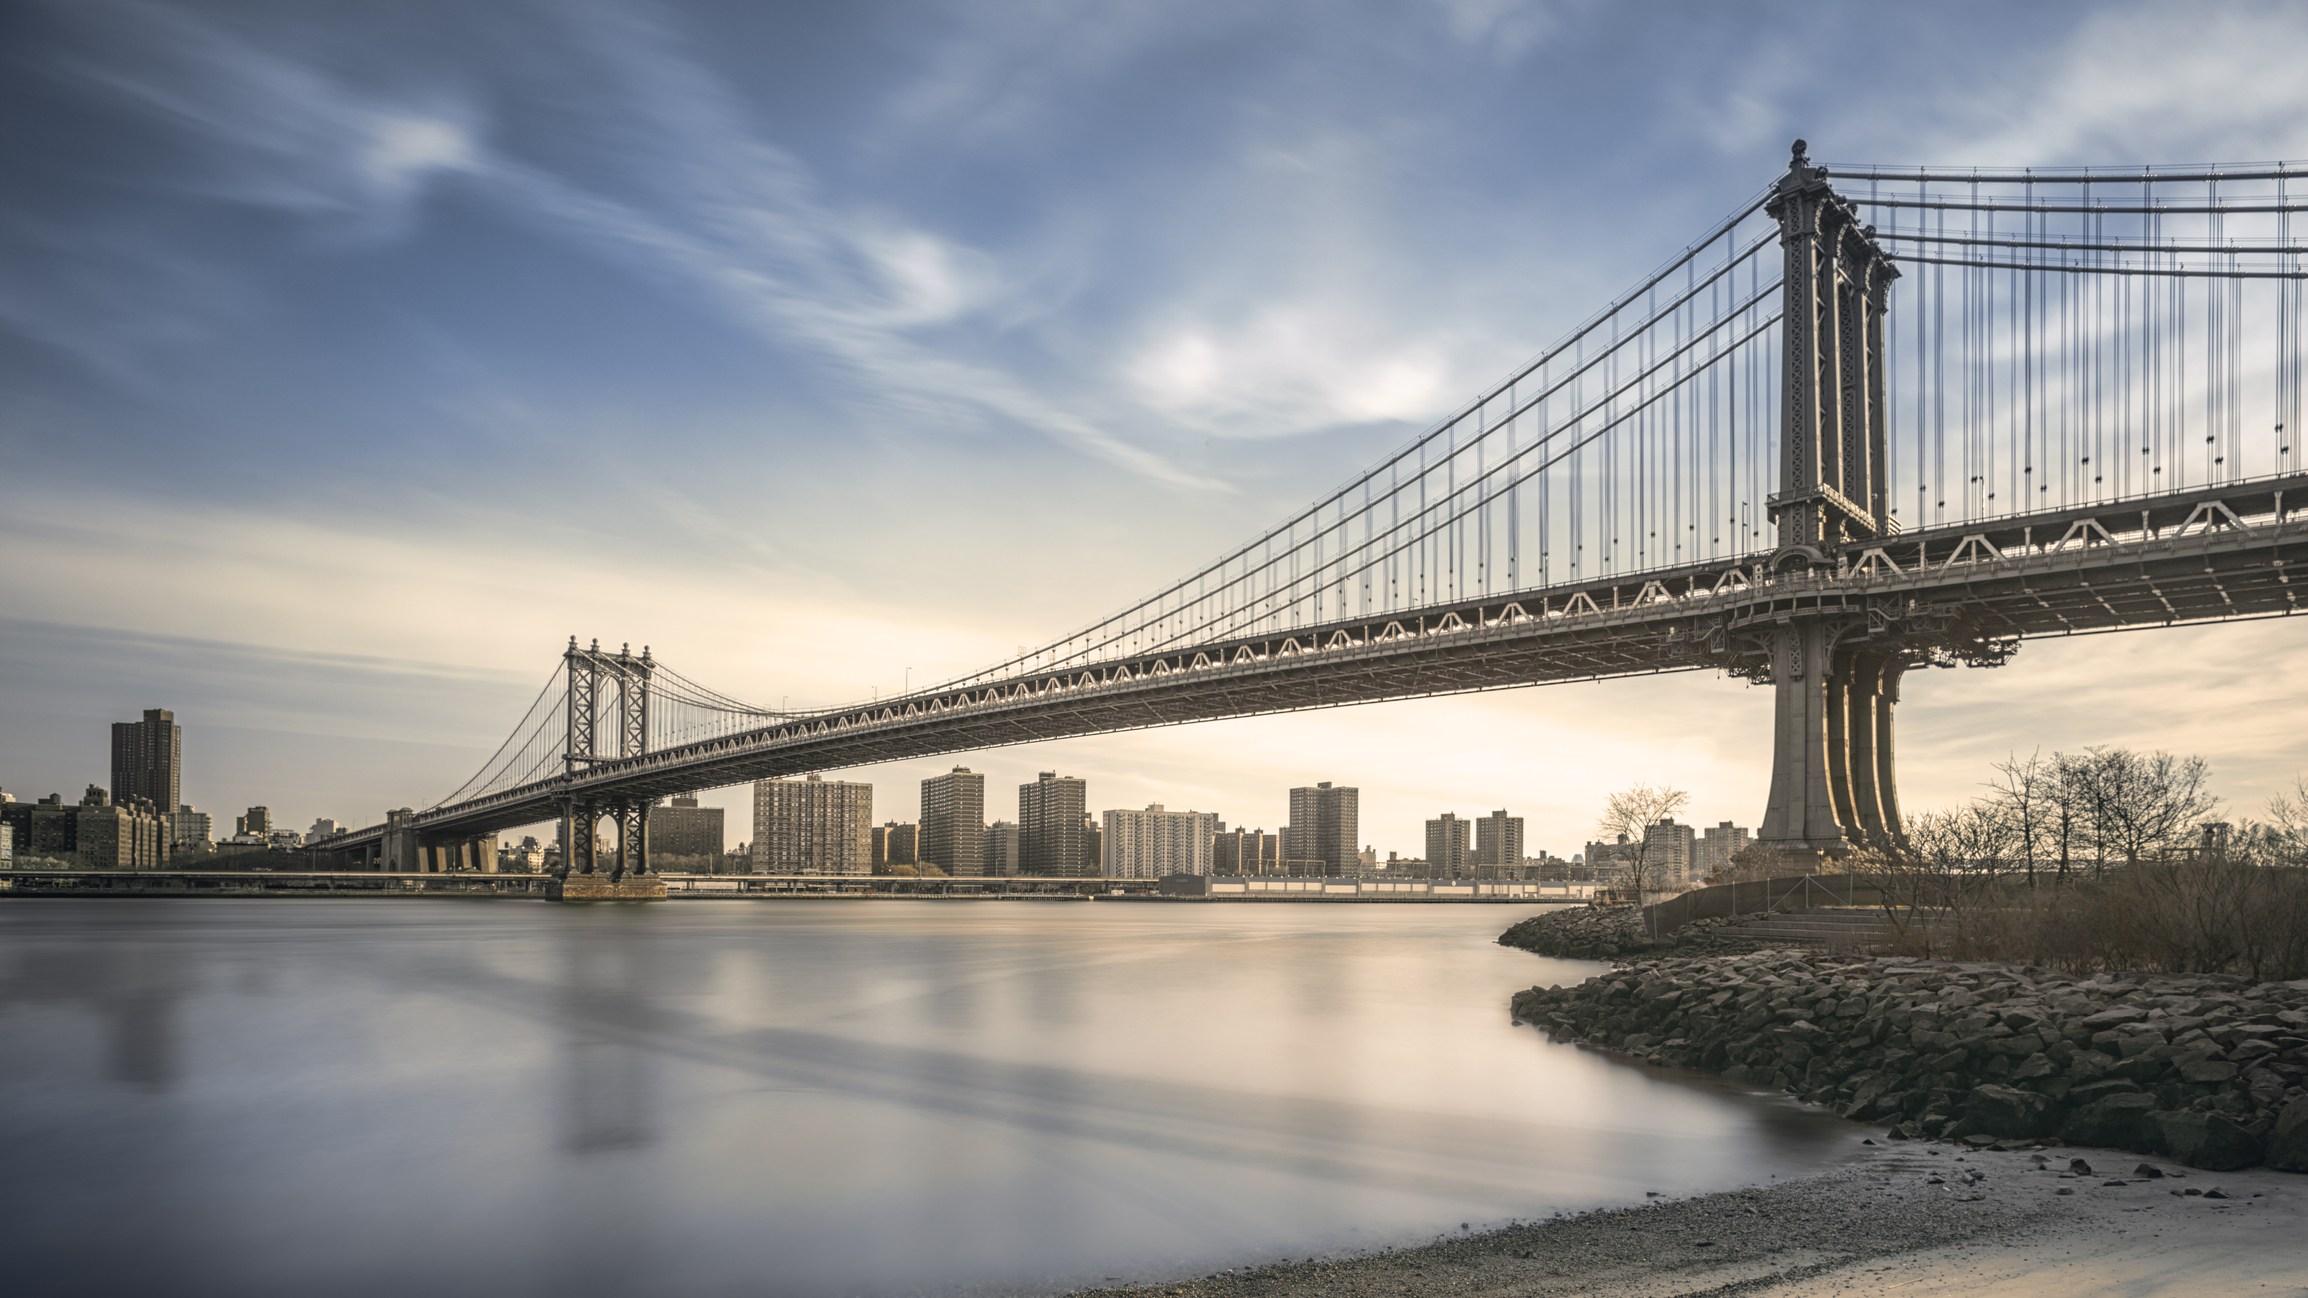 The Manhattan Bridge spans the East River in New York City